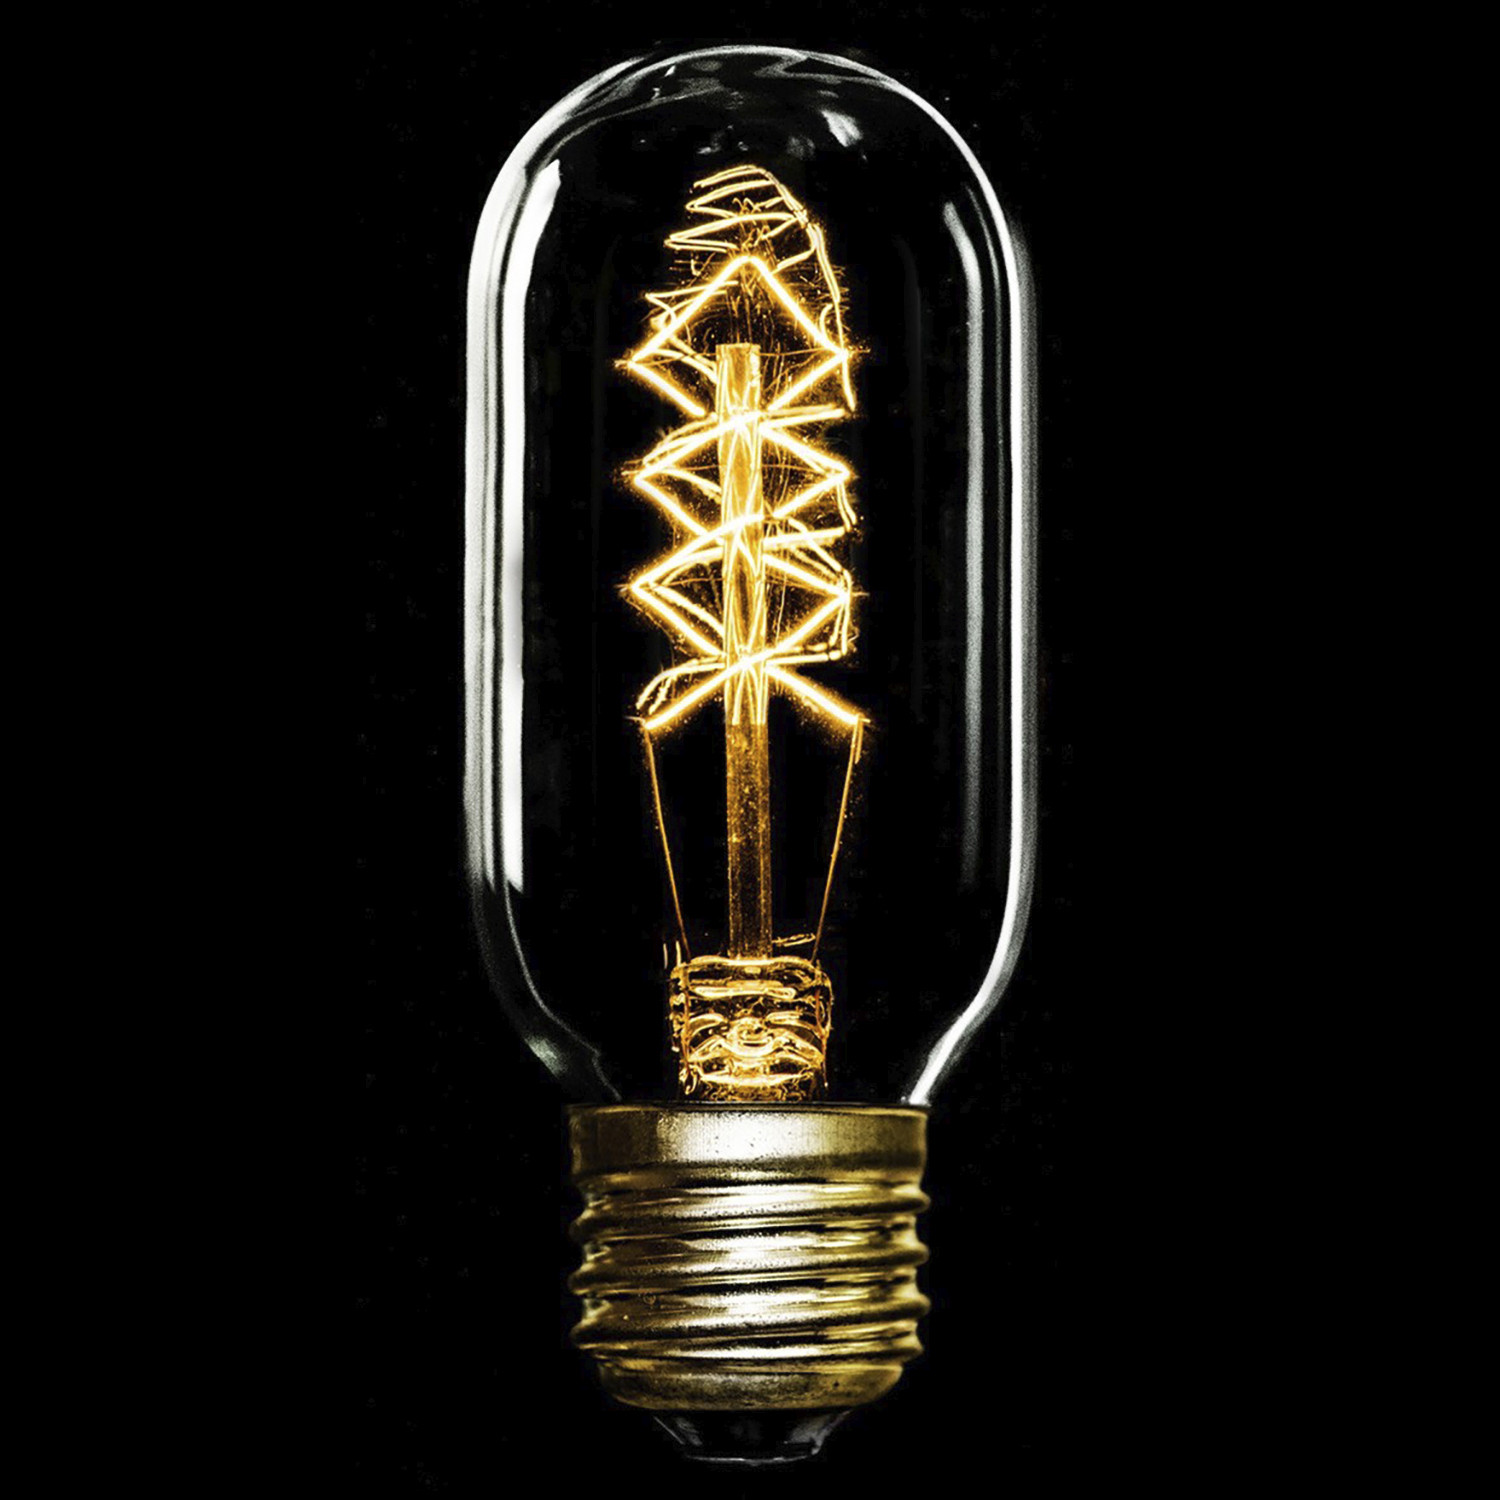 ES Antique Lamp Diamond Filament Dimmable Bulb - Warm White Image 2